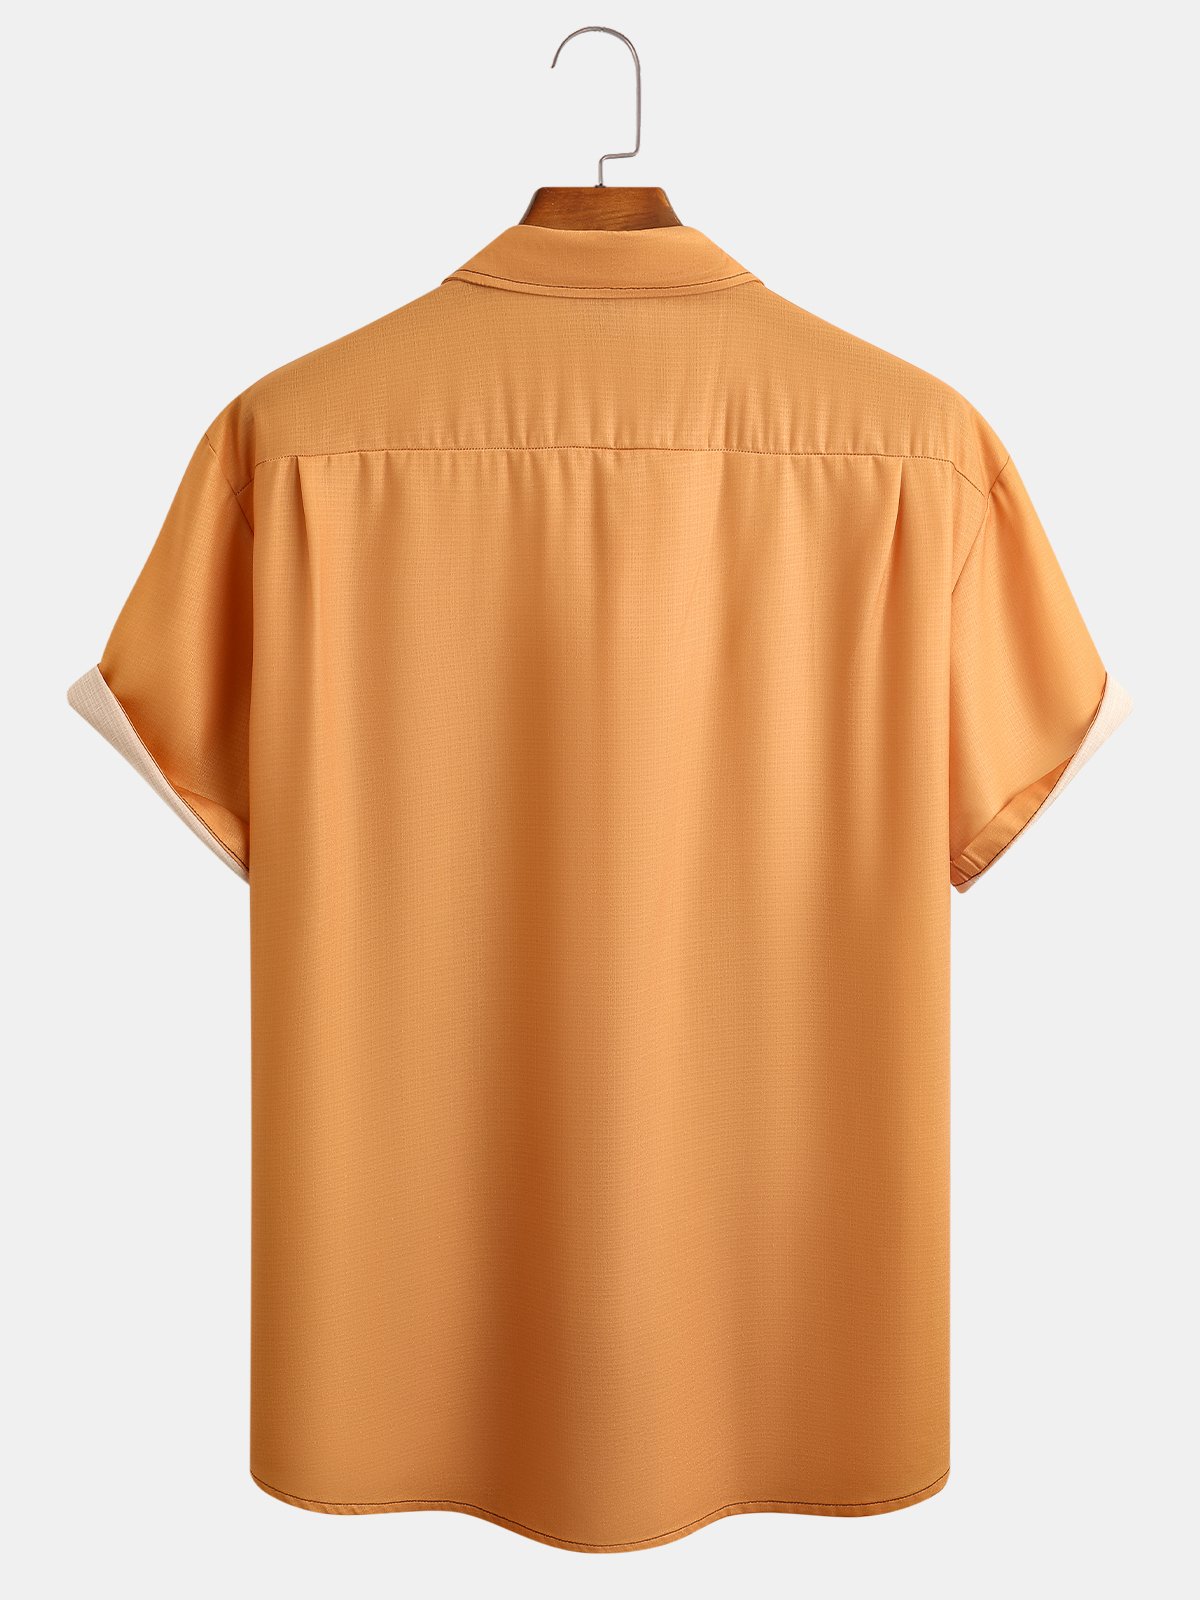 Stripe Chest Pocket Short Sleeve Casual Bowling Shirt